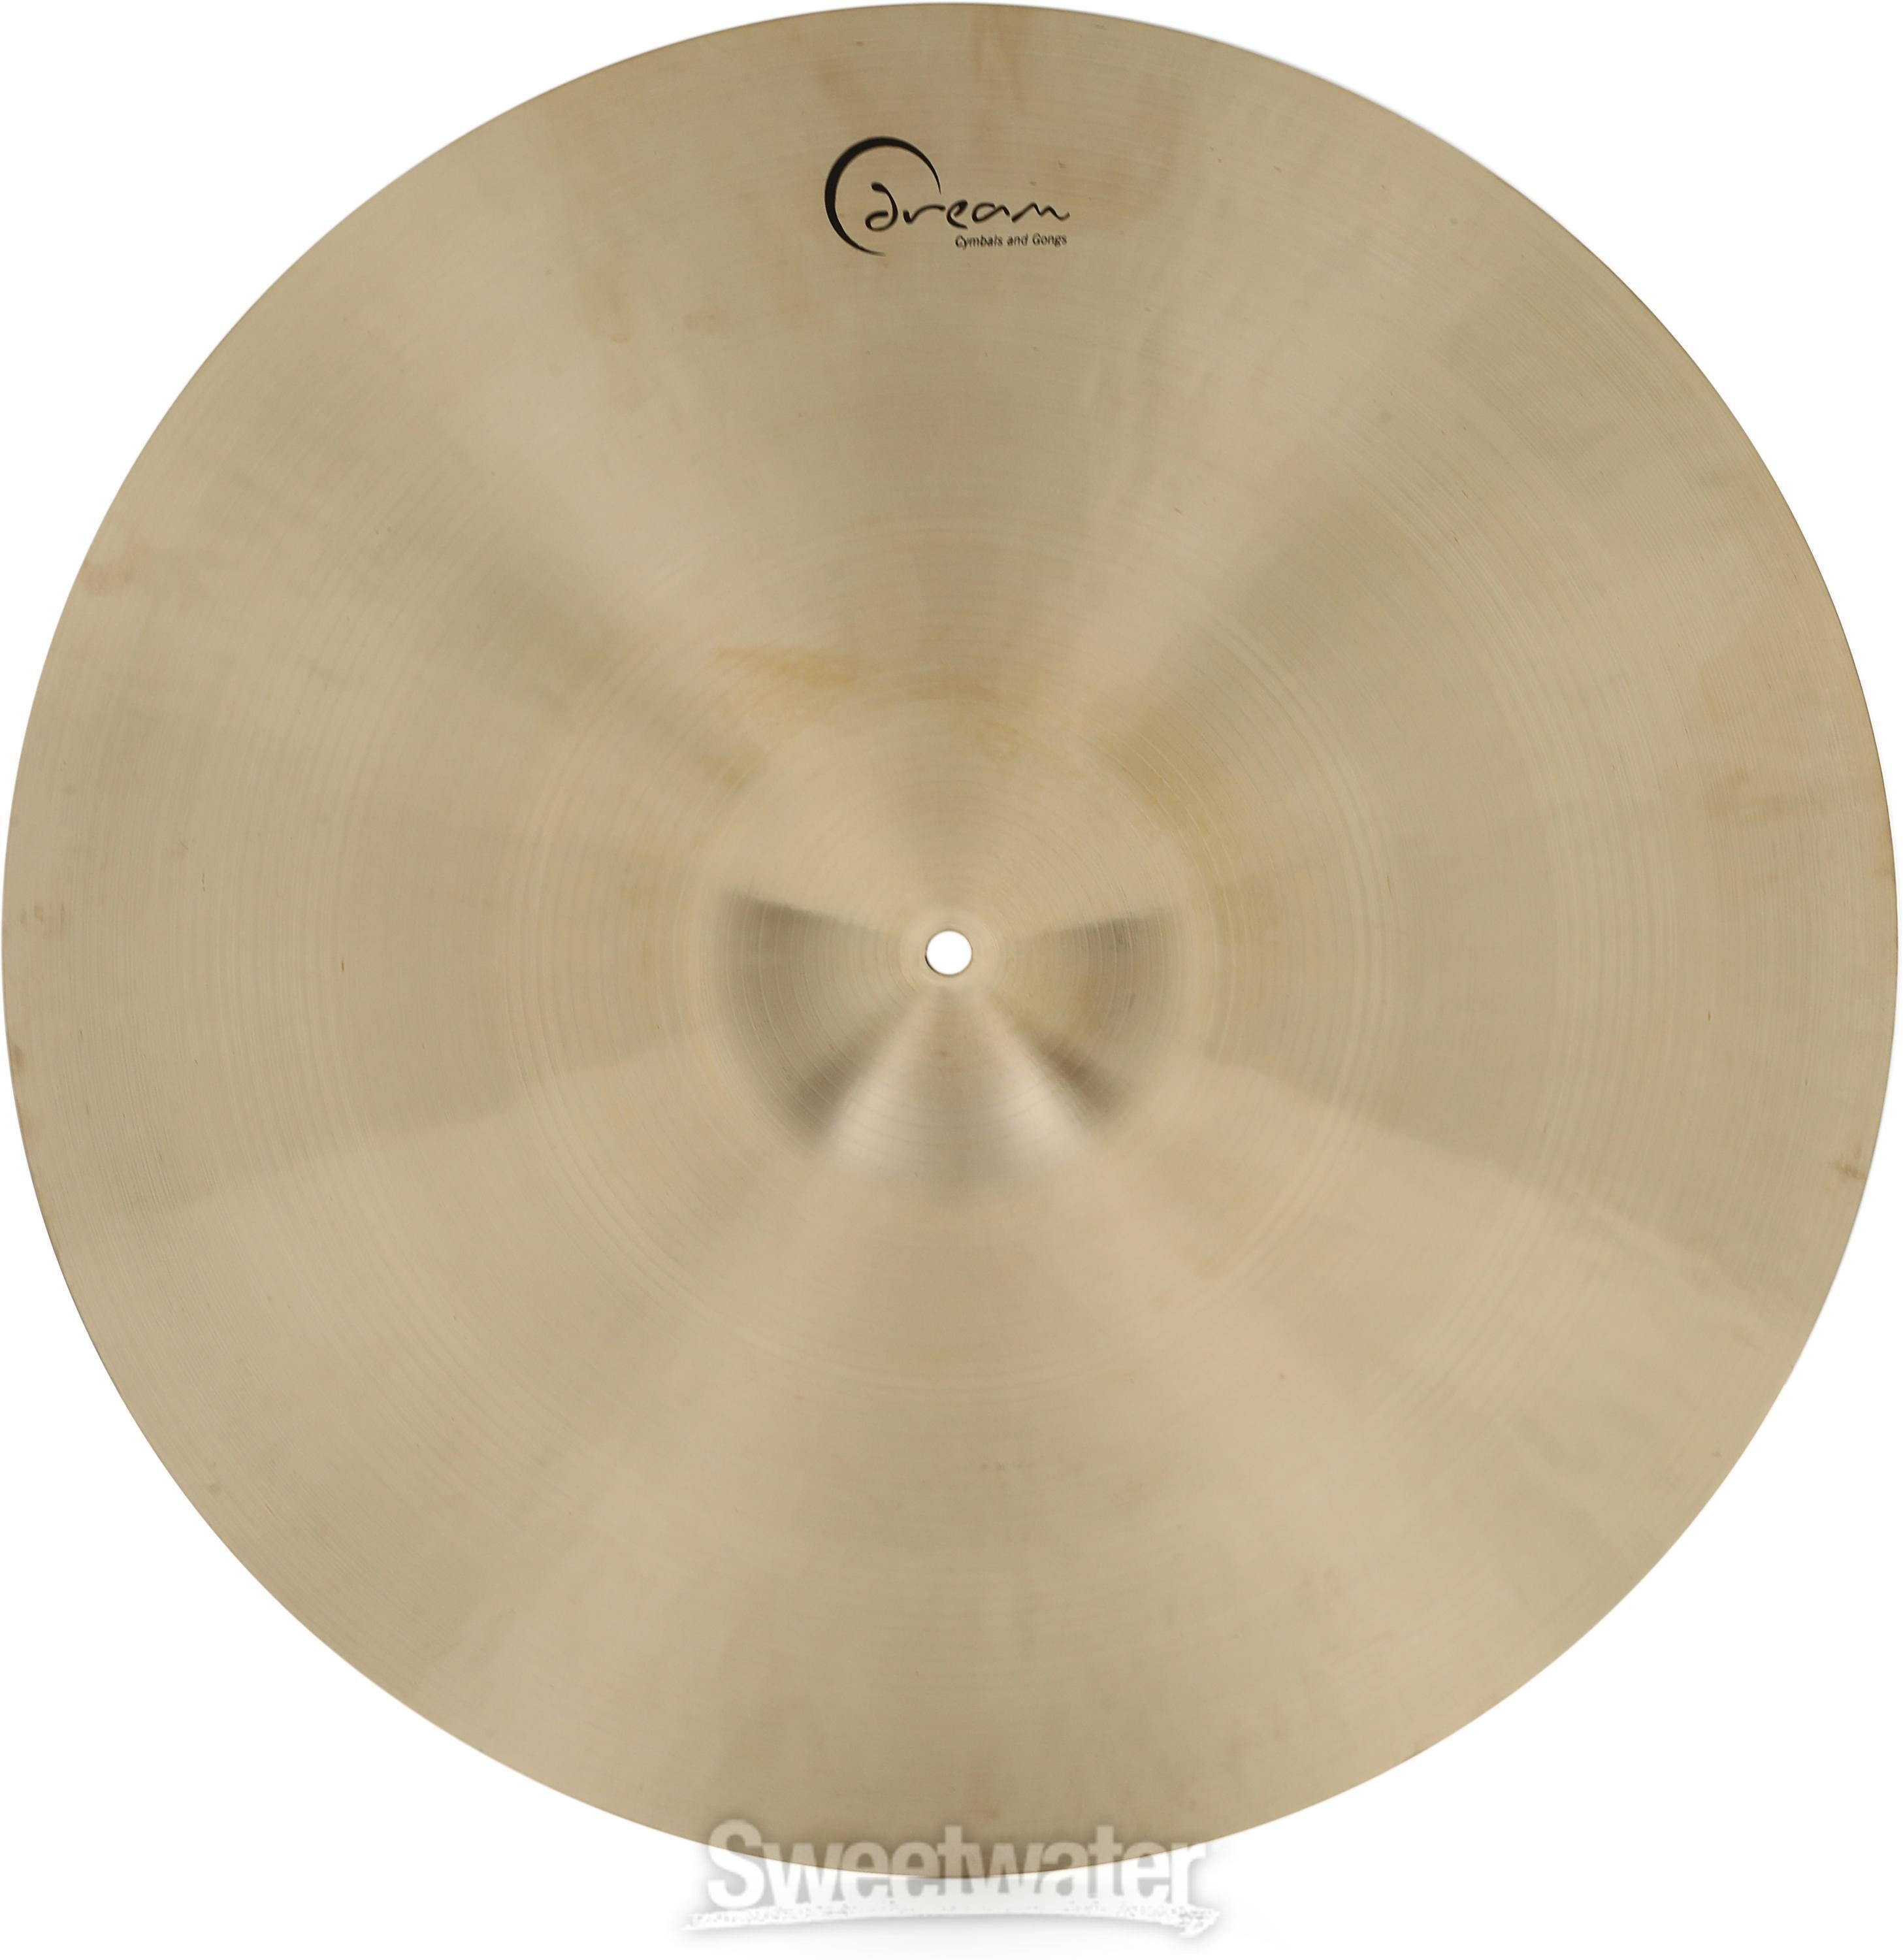 Dream Contact Crash/Ride Cymbal - 22-inch